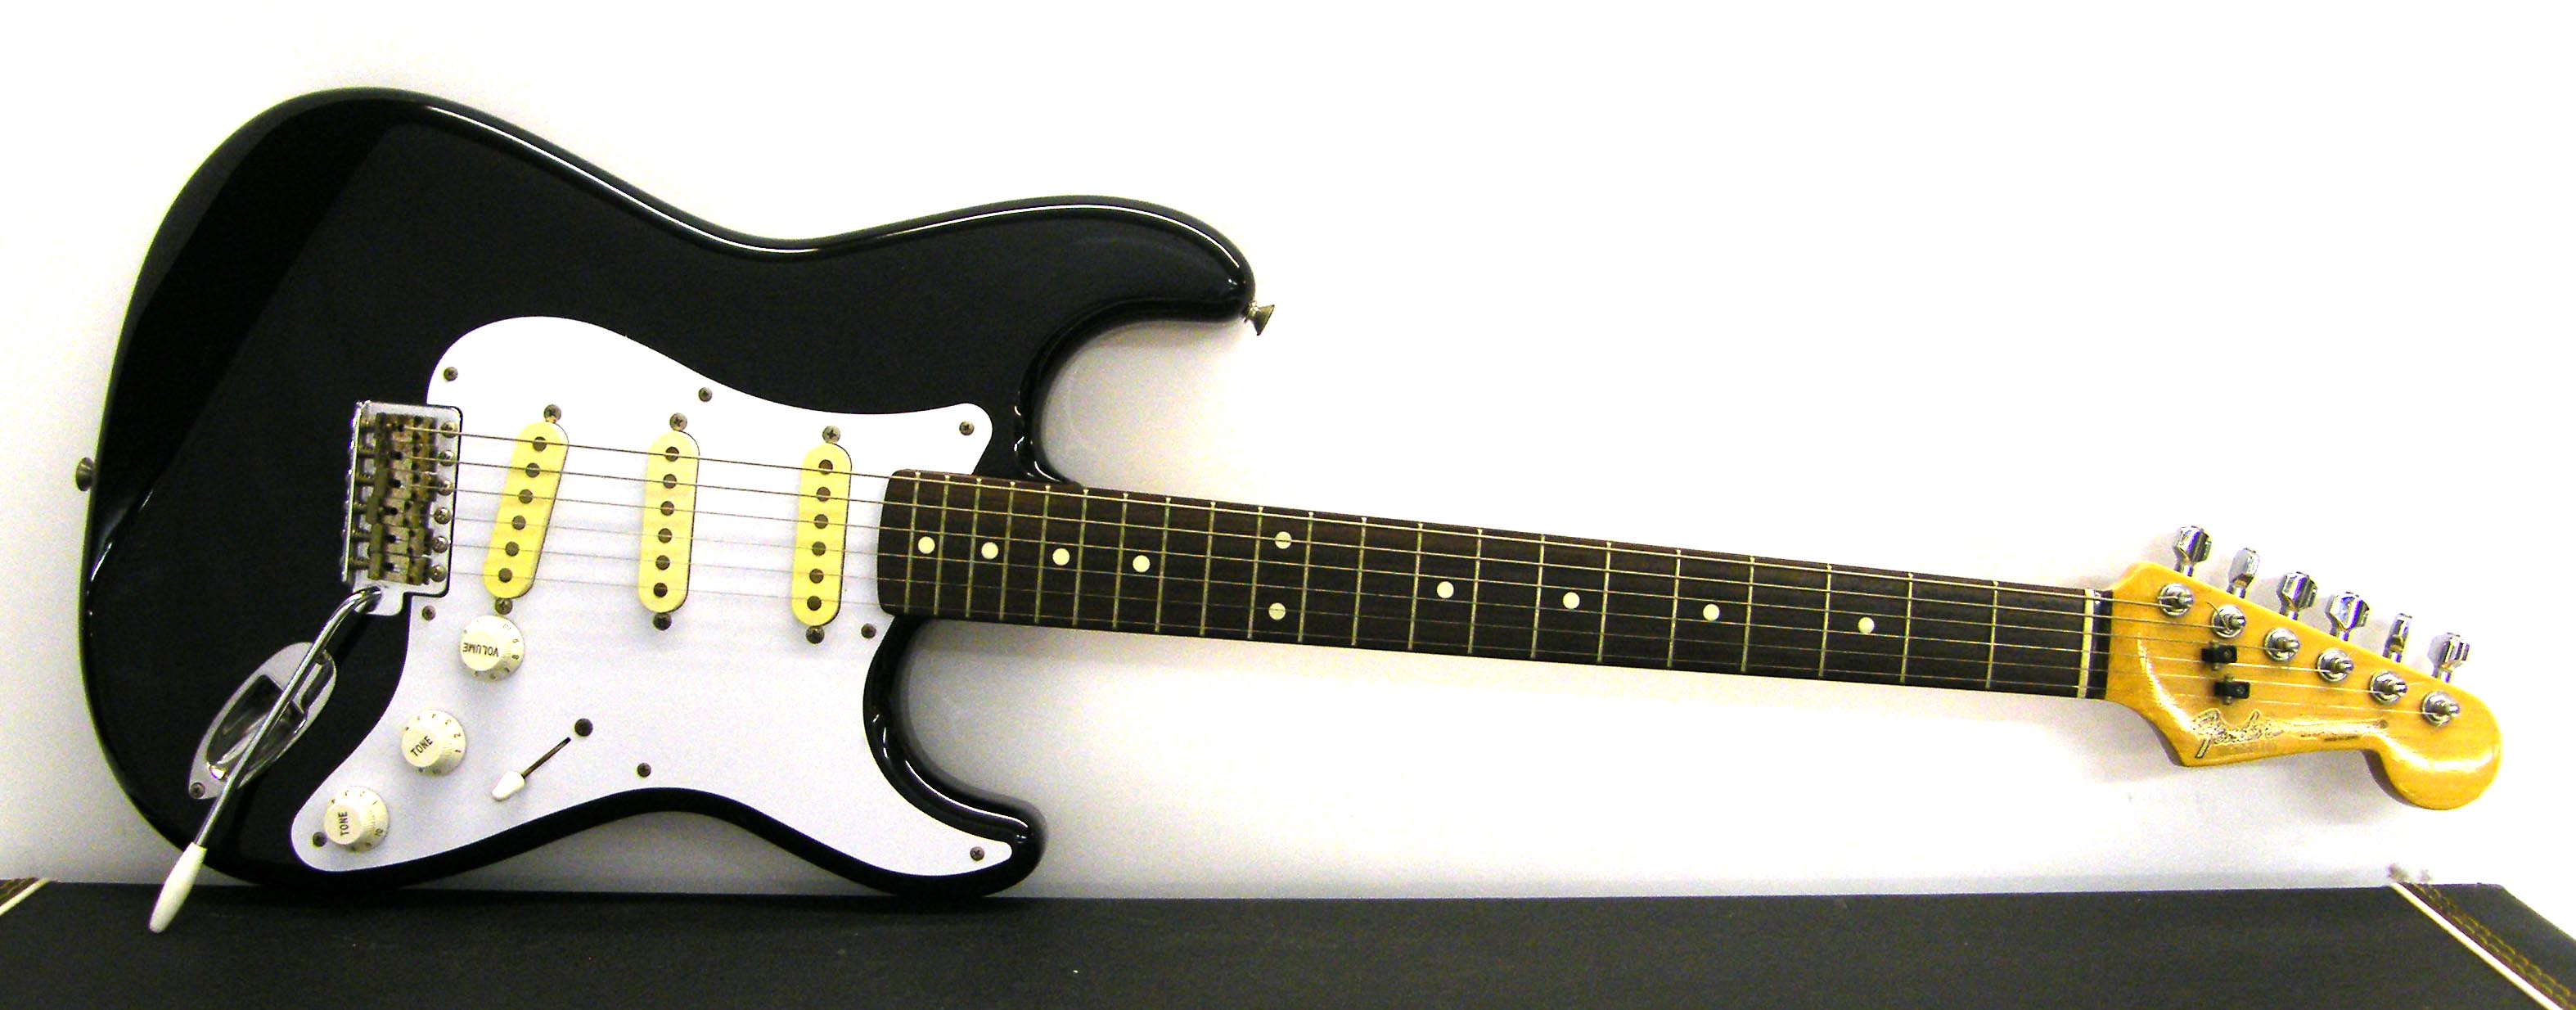 Mid 1980s Fender ST-362V Stratocaster electric guitar, made in Japan, ser. no. E947157, black finish